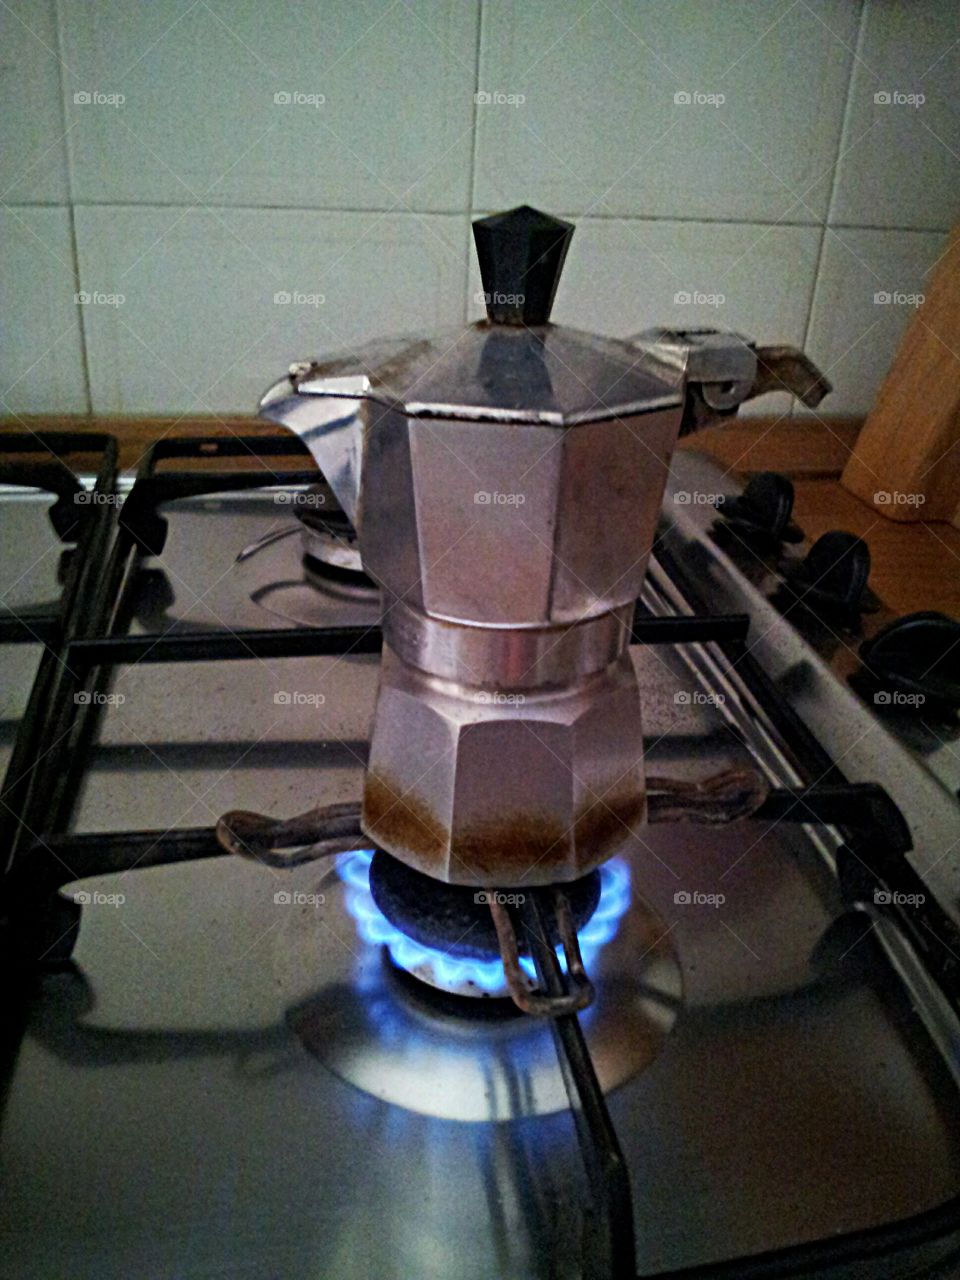 Making coffee